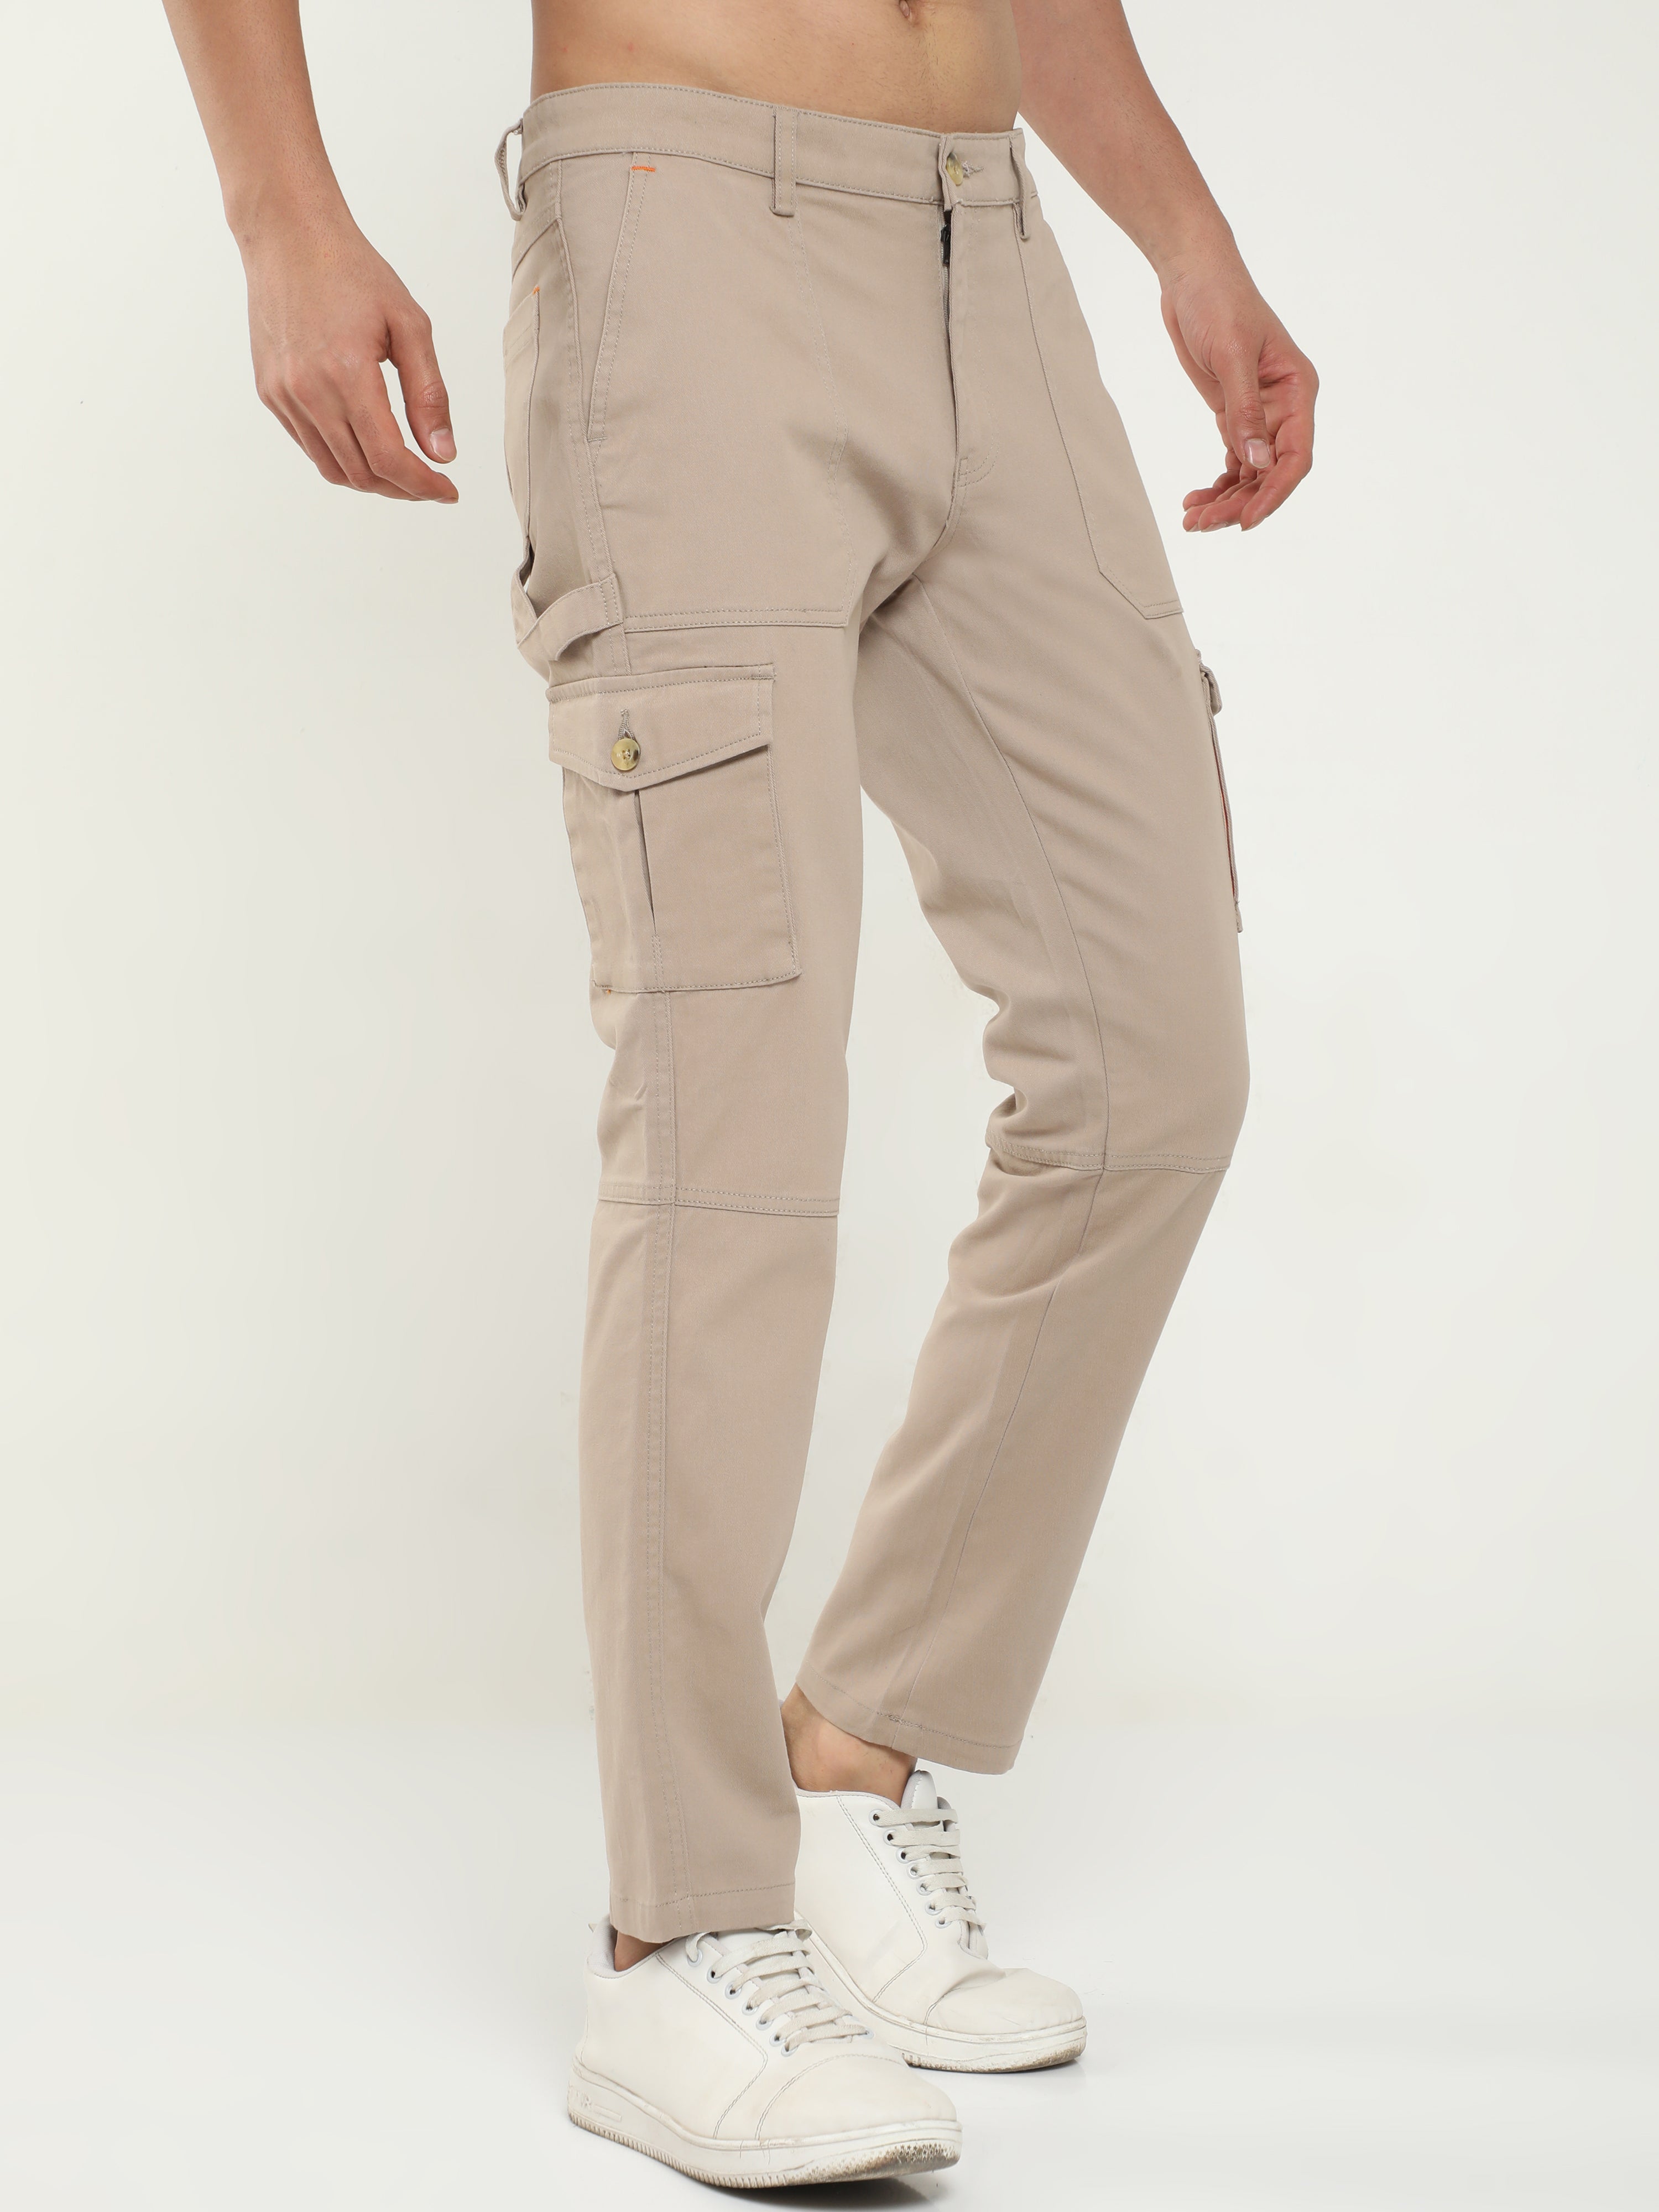 LT KHAKI 6 Pocket Slim Fit Cargo Pant – ROOKIES